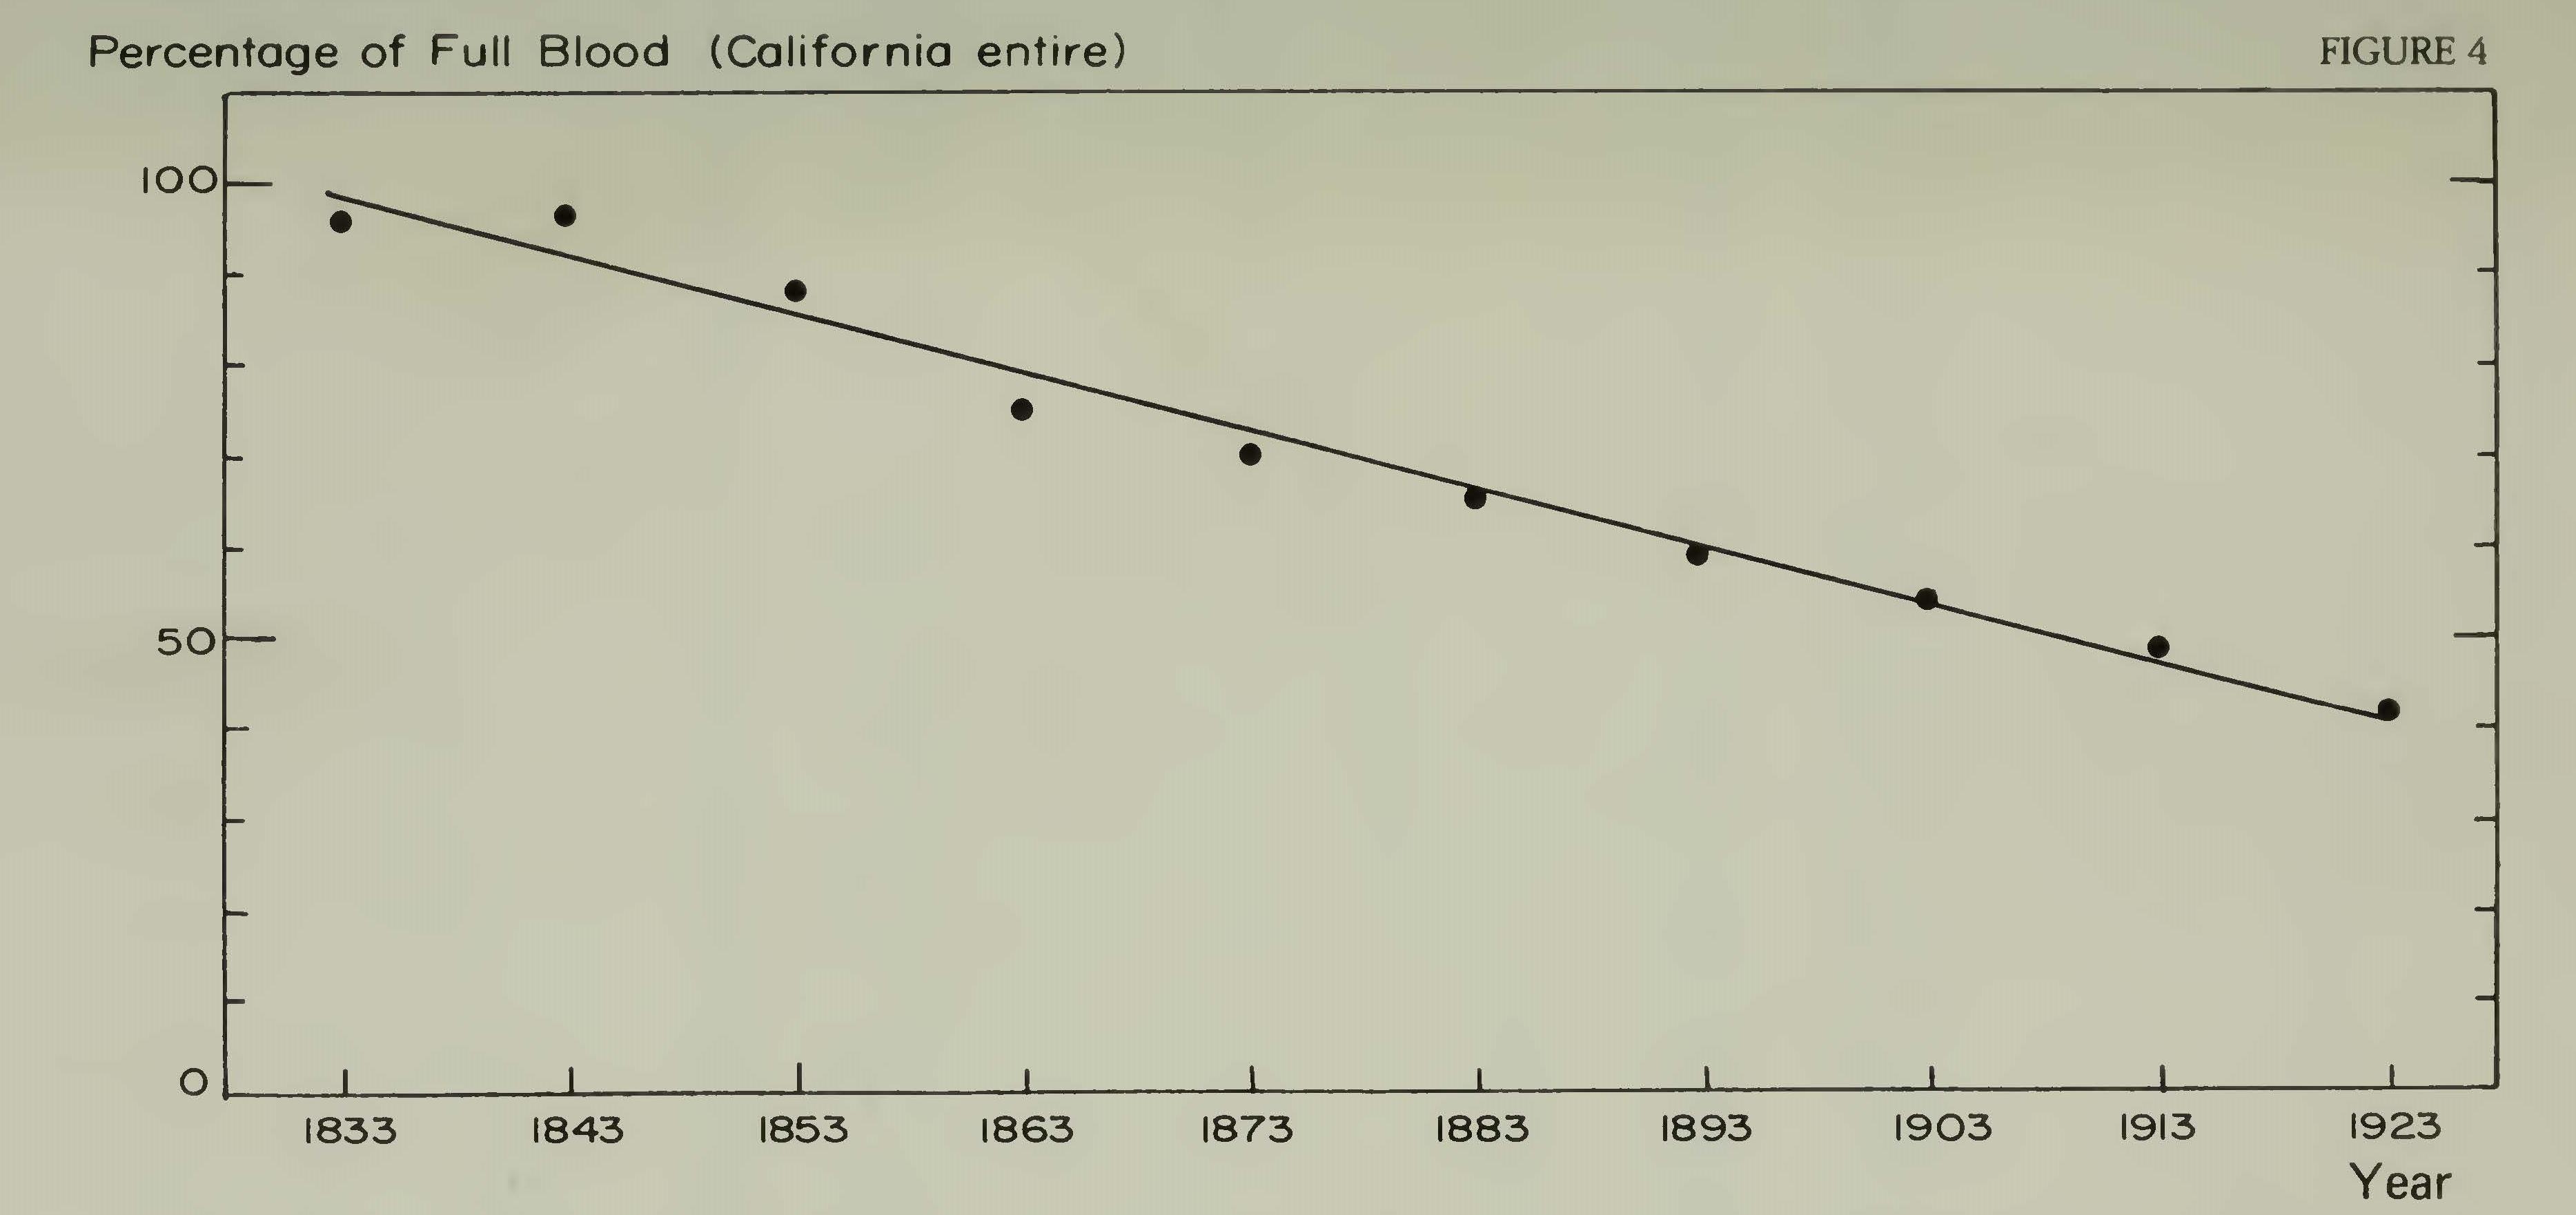 s-f-sherburne-f-cook-population-of-the-california-7.jpg